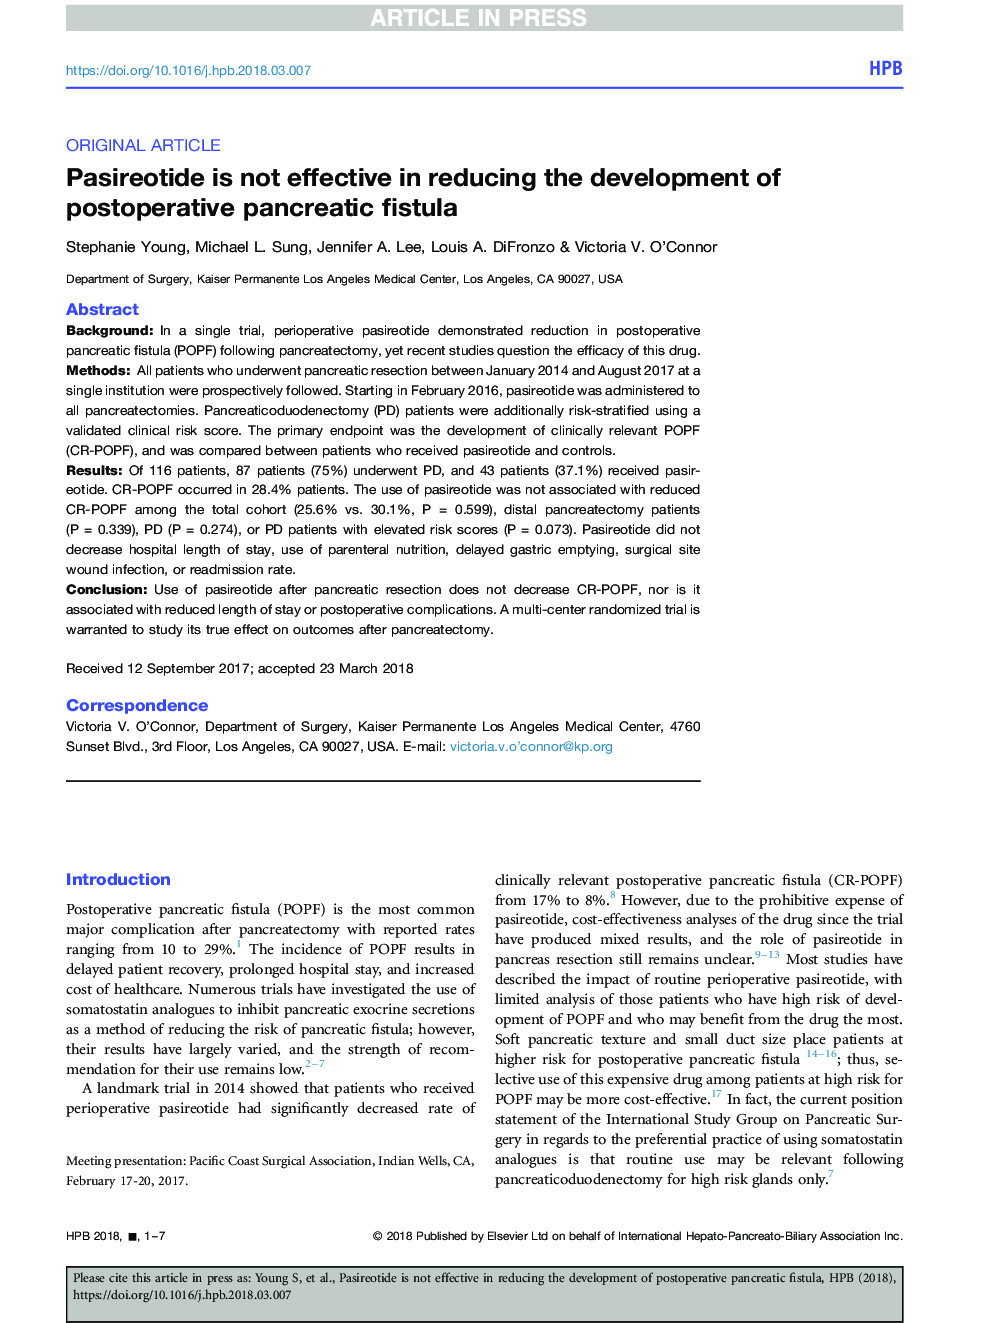 Pasireotide is not effective in reducing the development of postoperative pancreatic fistula